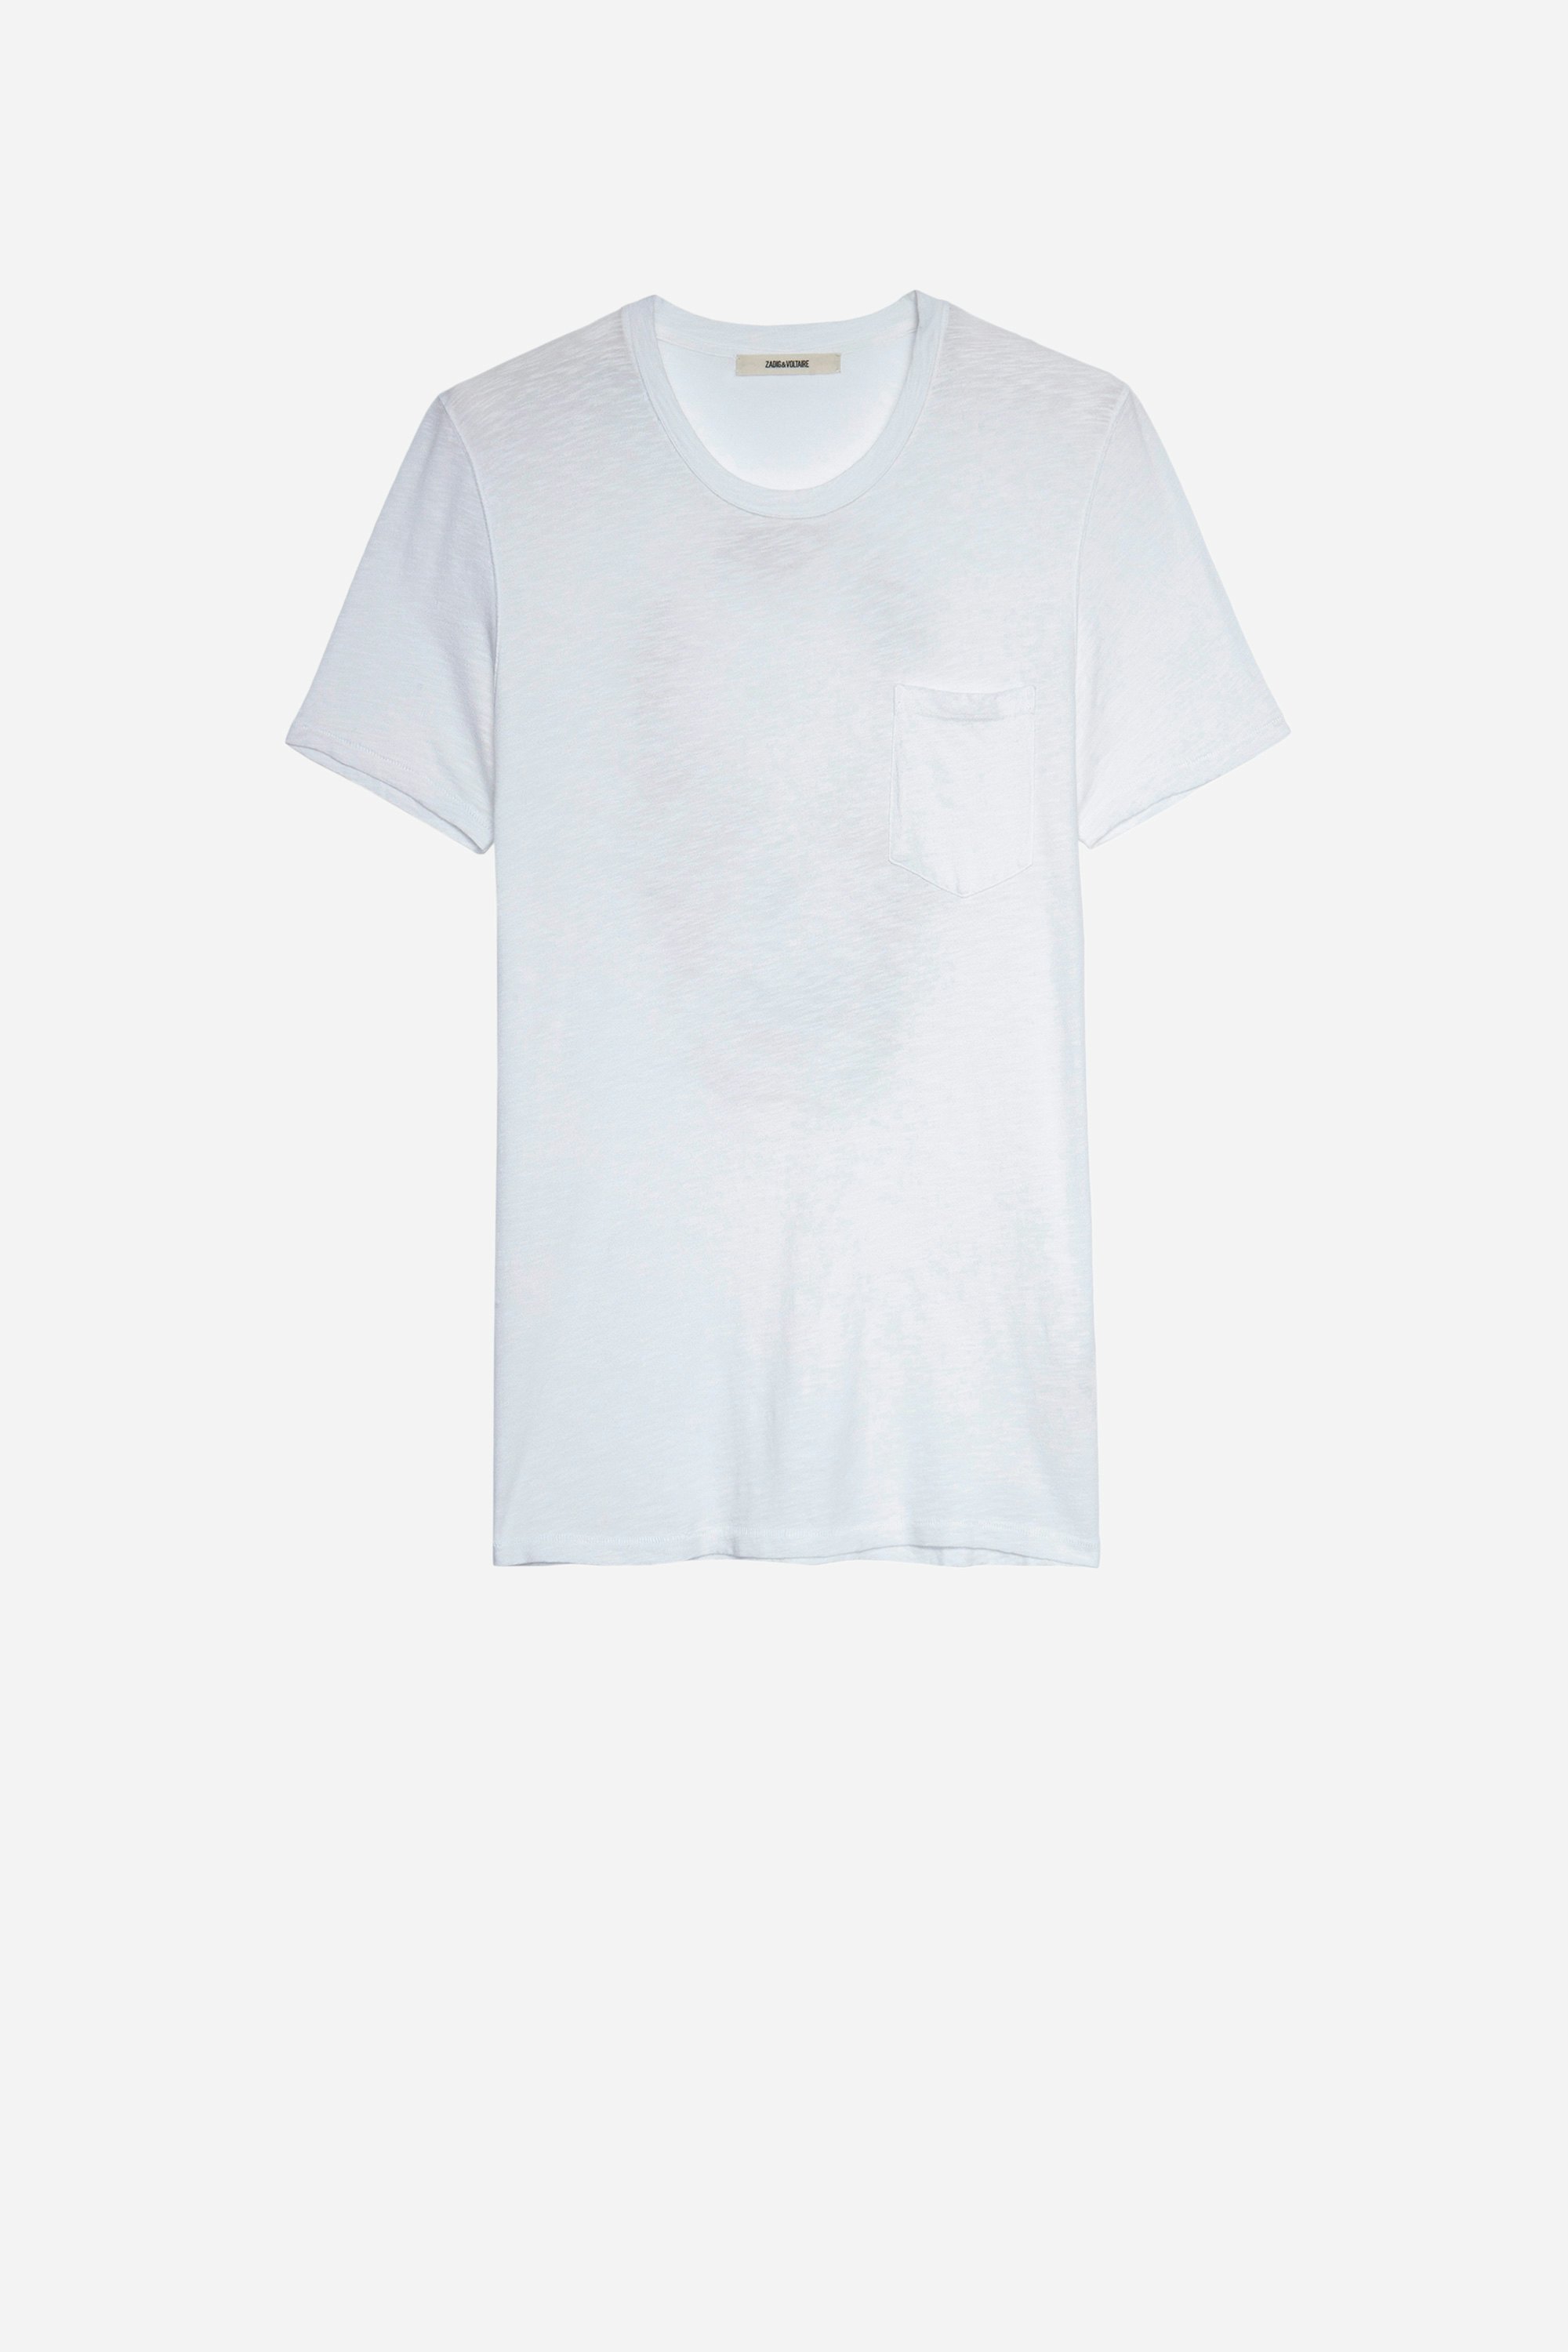 Camiseta Stockholm - Camiseta blanca para hombre con cuello redondo.